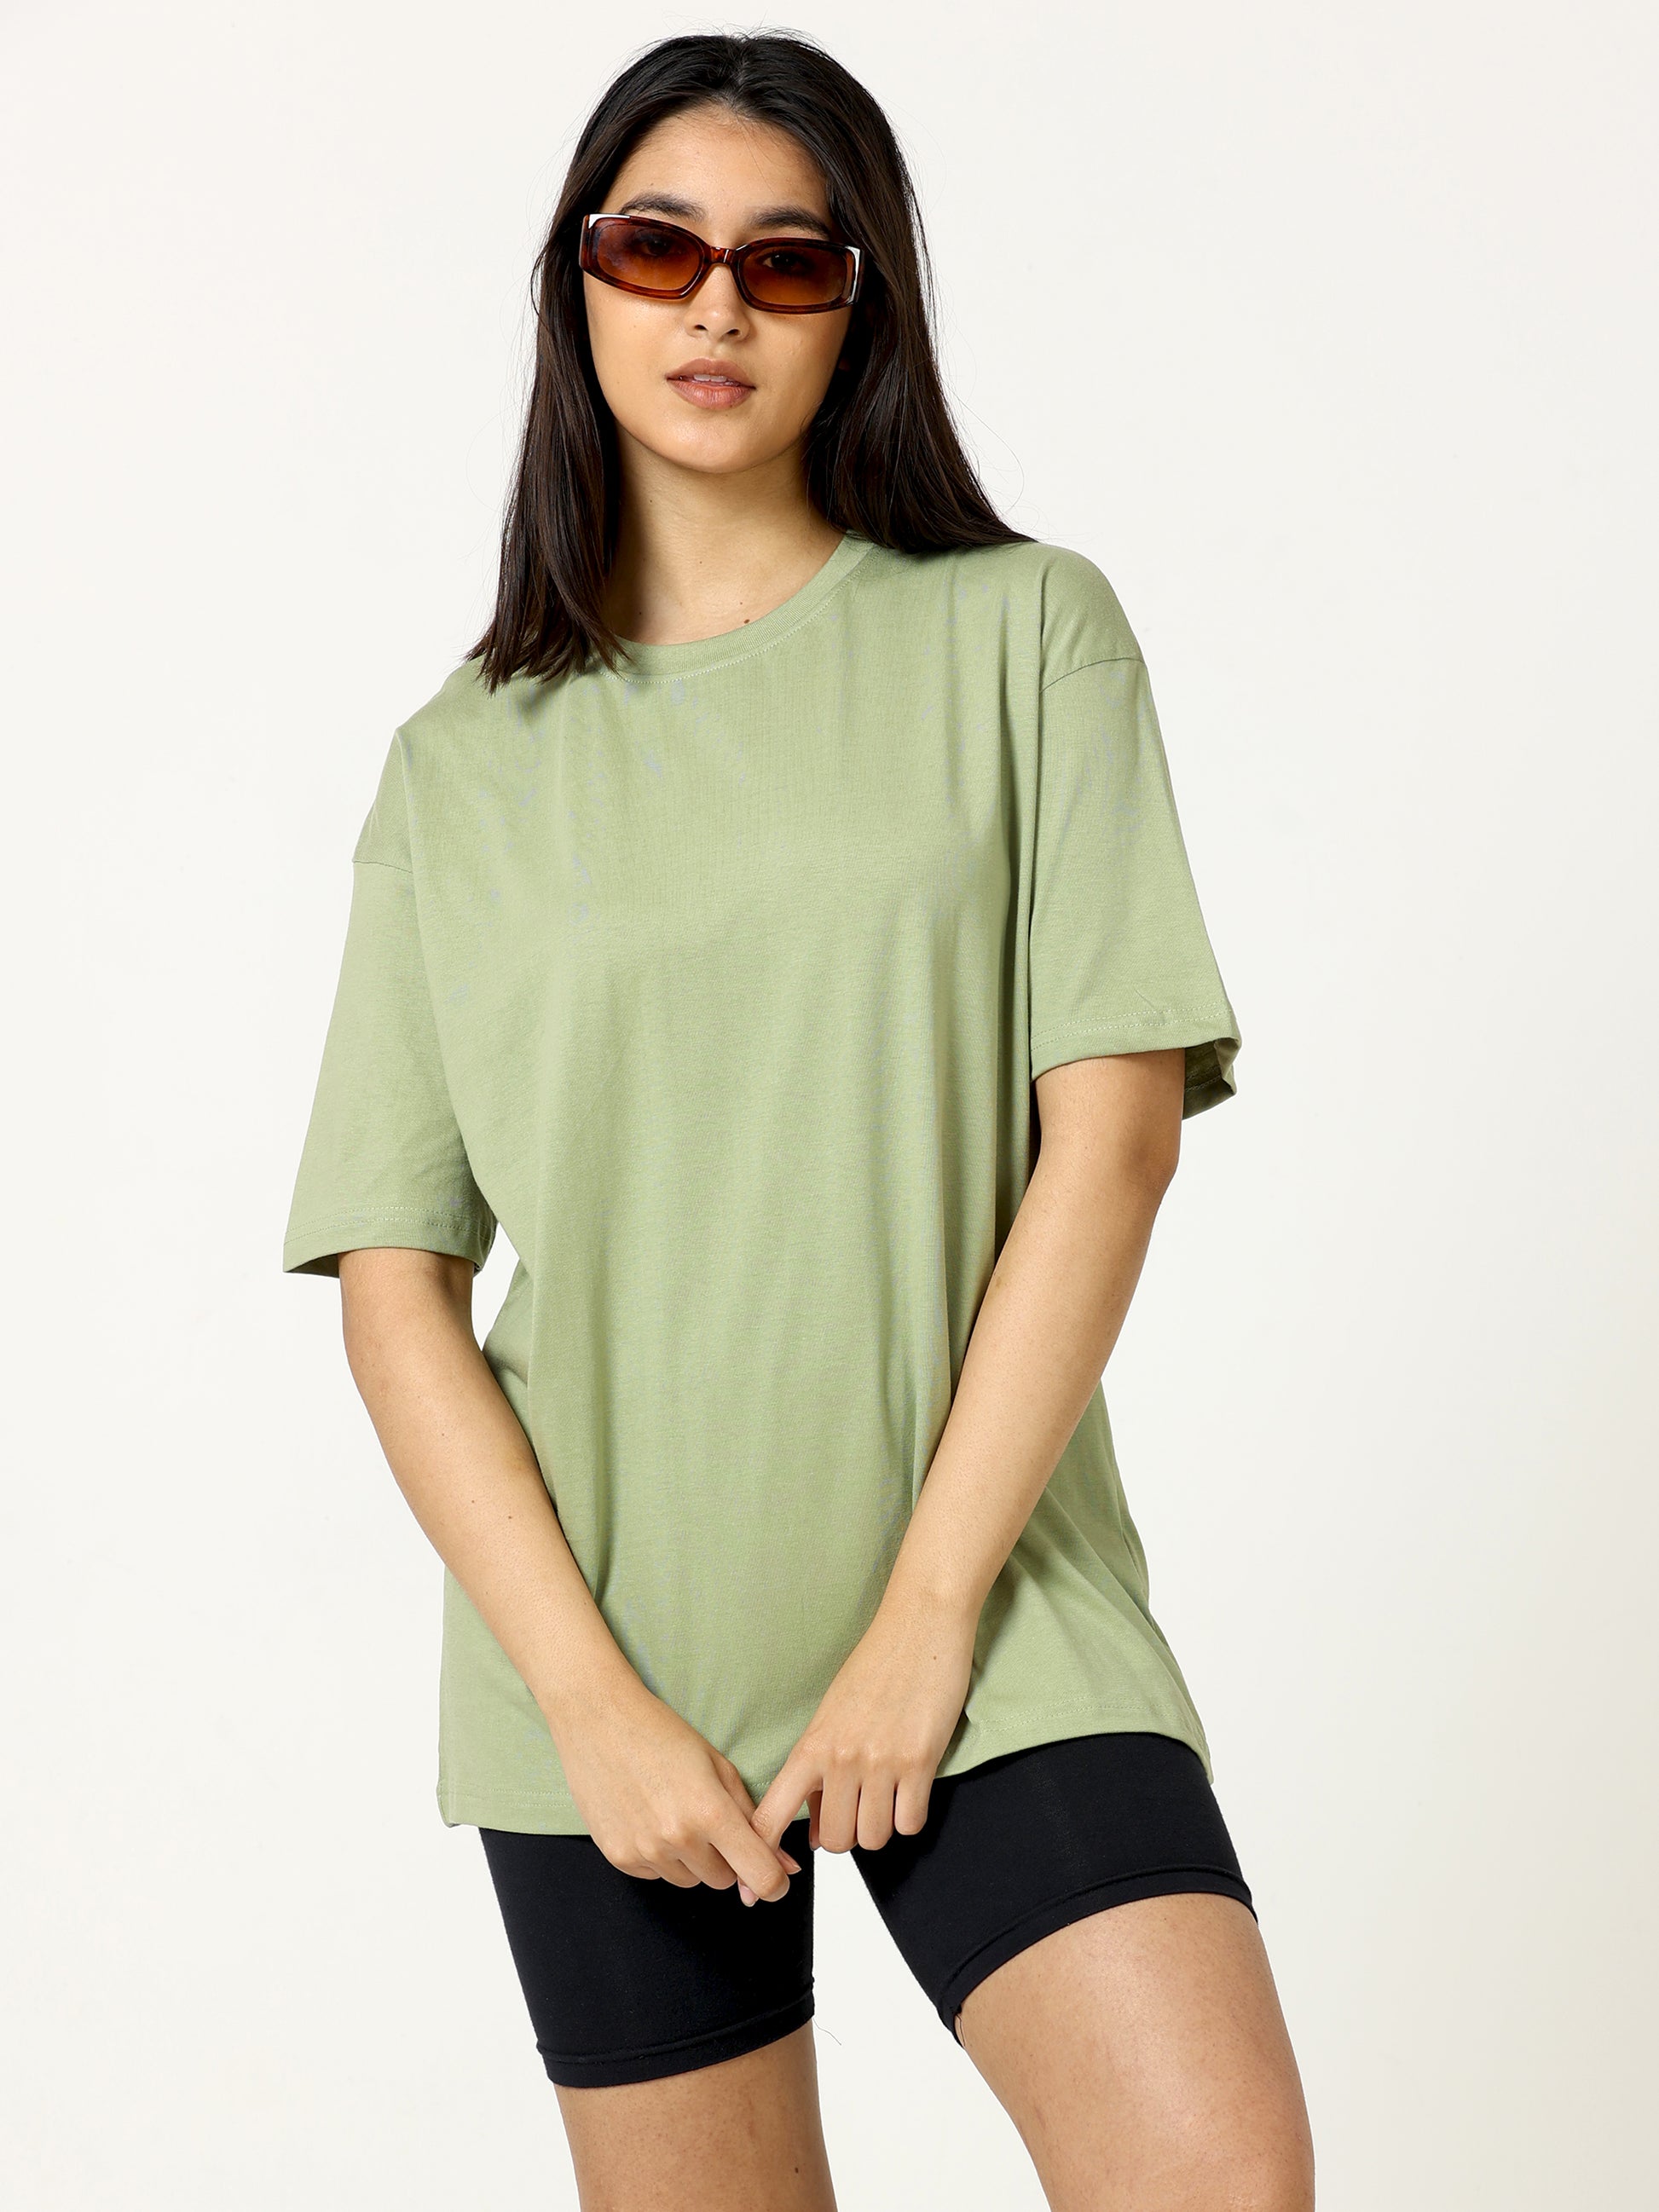 Oversized Short Sleeve T-Shirt in Heather Grey